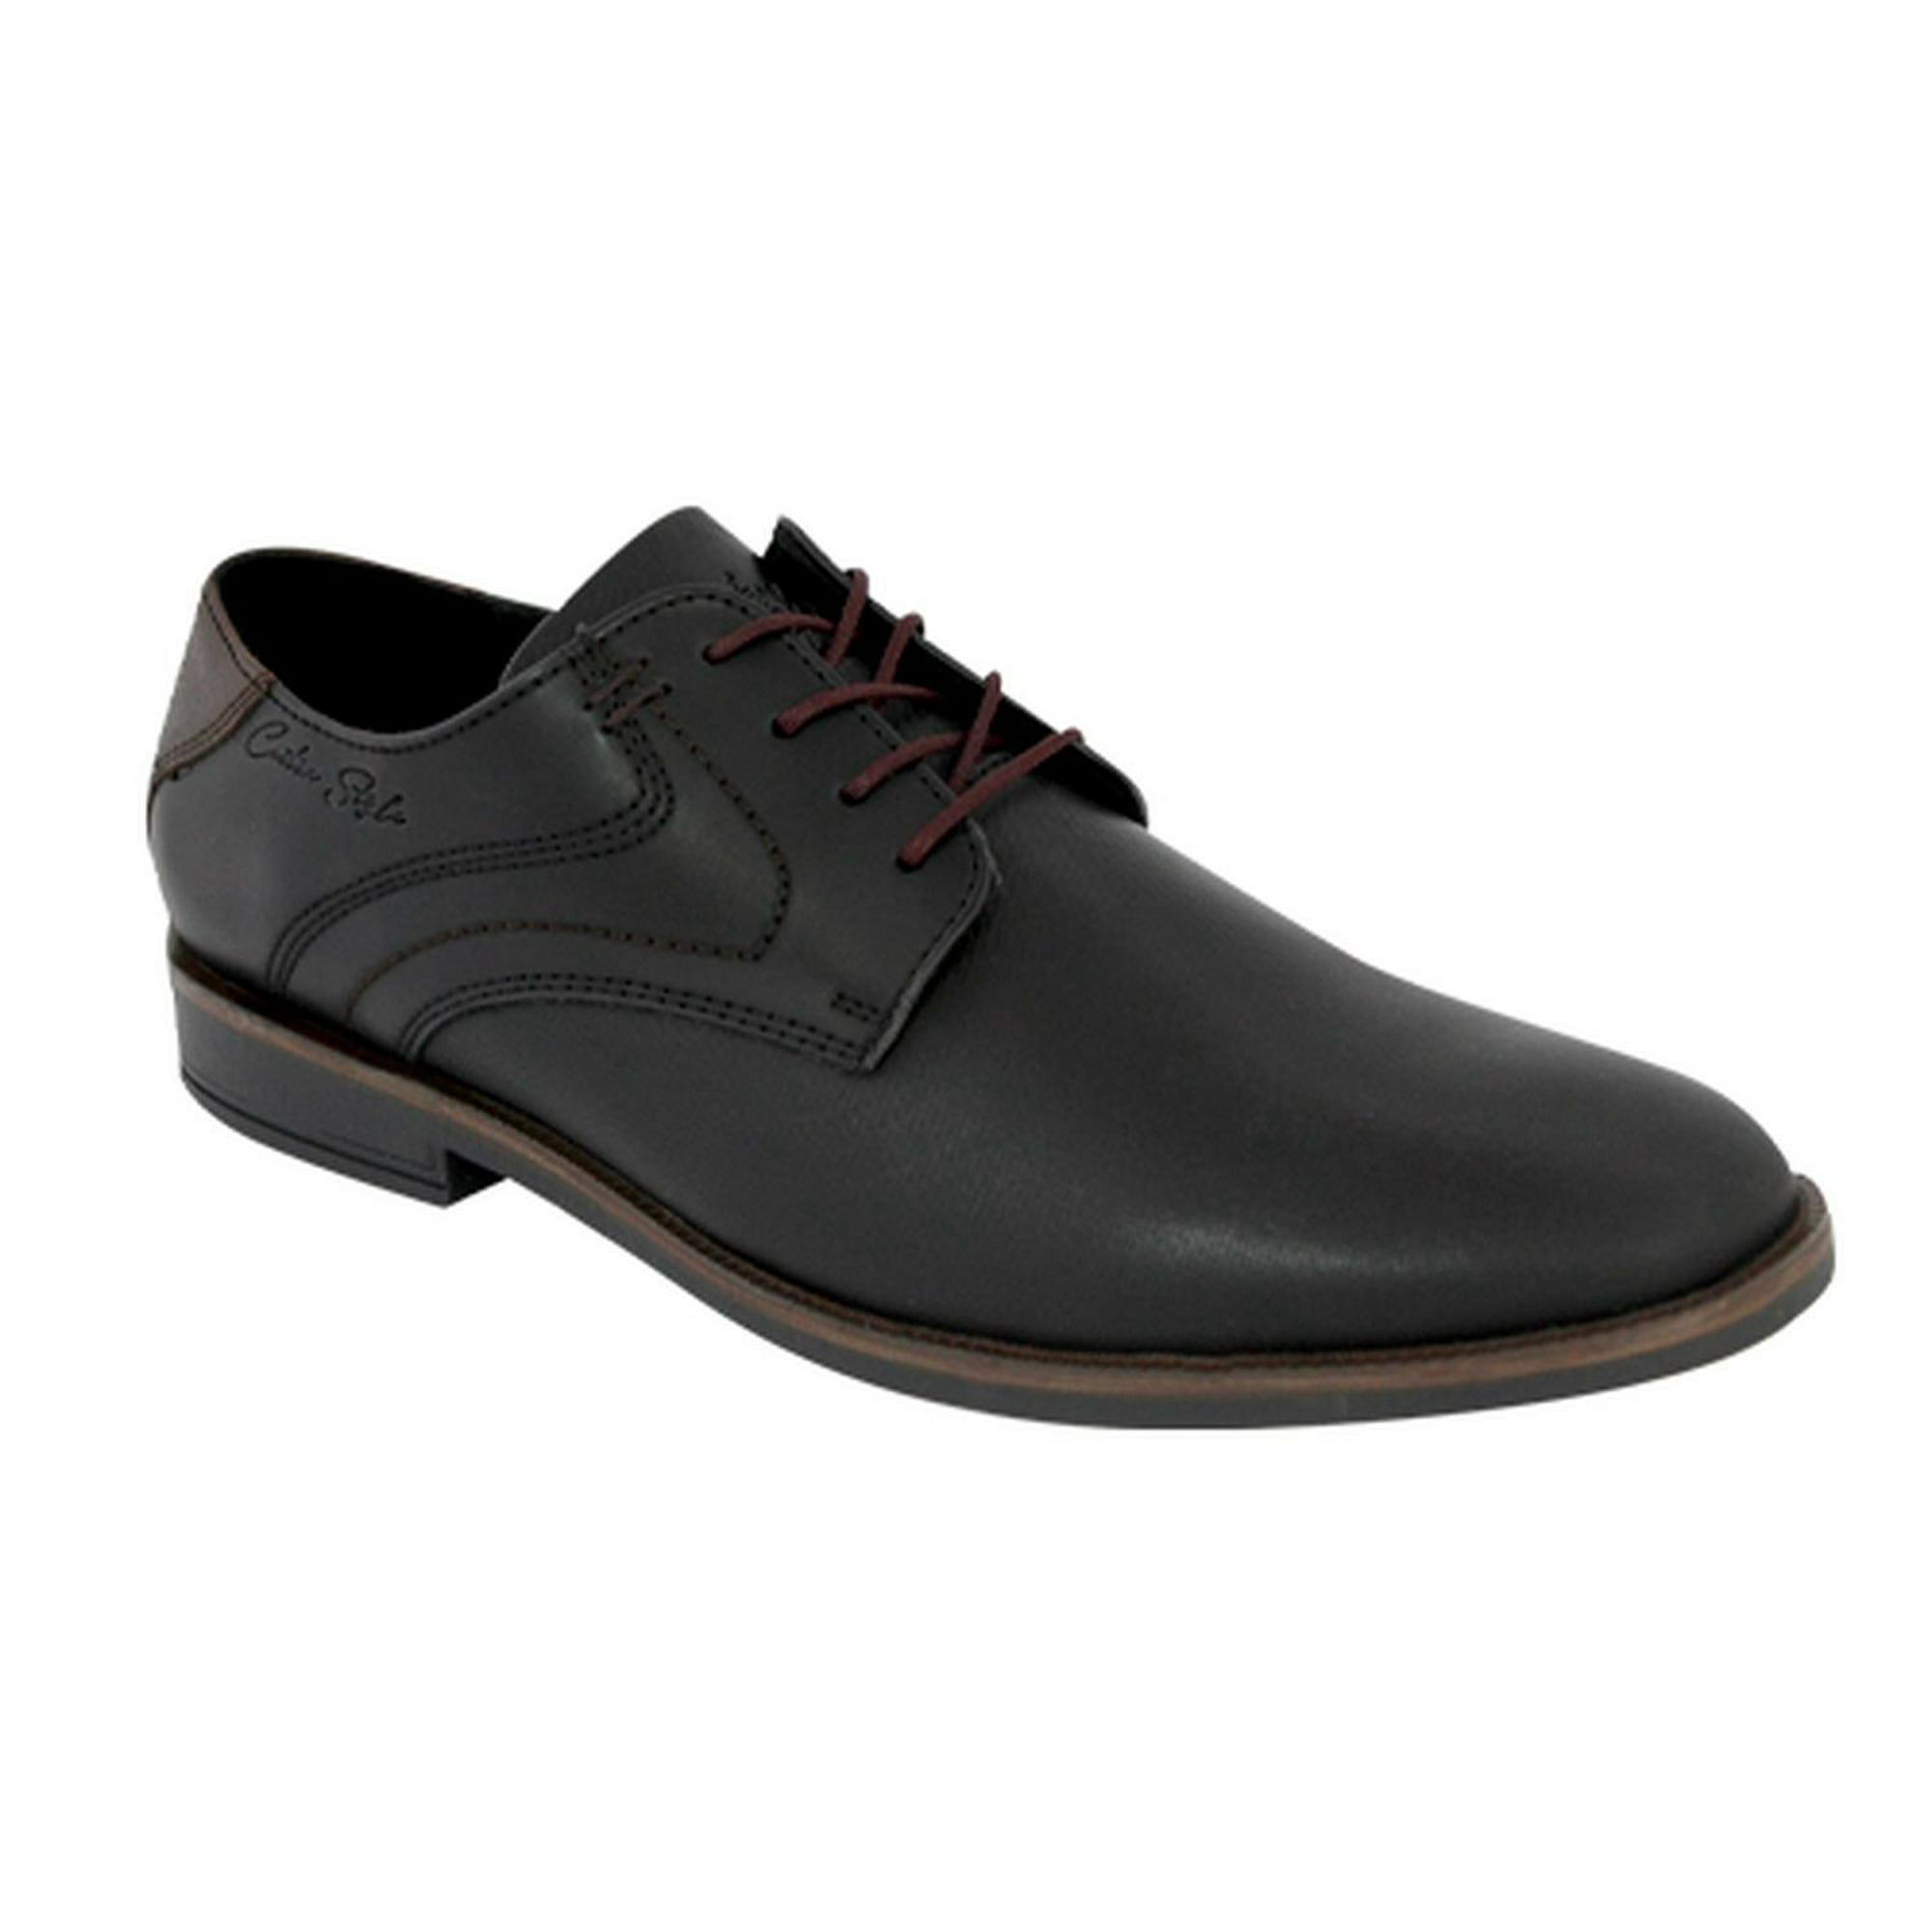 Zapatos Hombre Oxfords Vestir Formales Custom Style negros 4214 negro 28  CUSTOM STYLE 4214